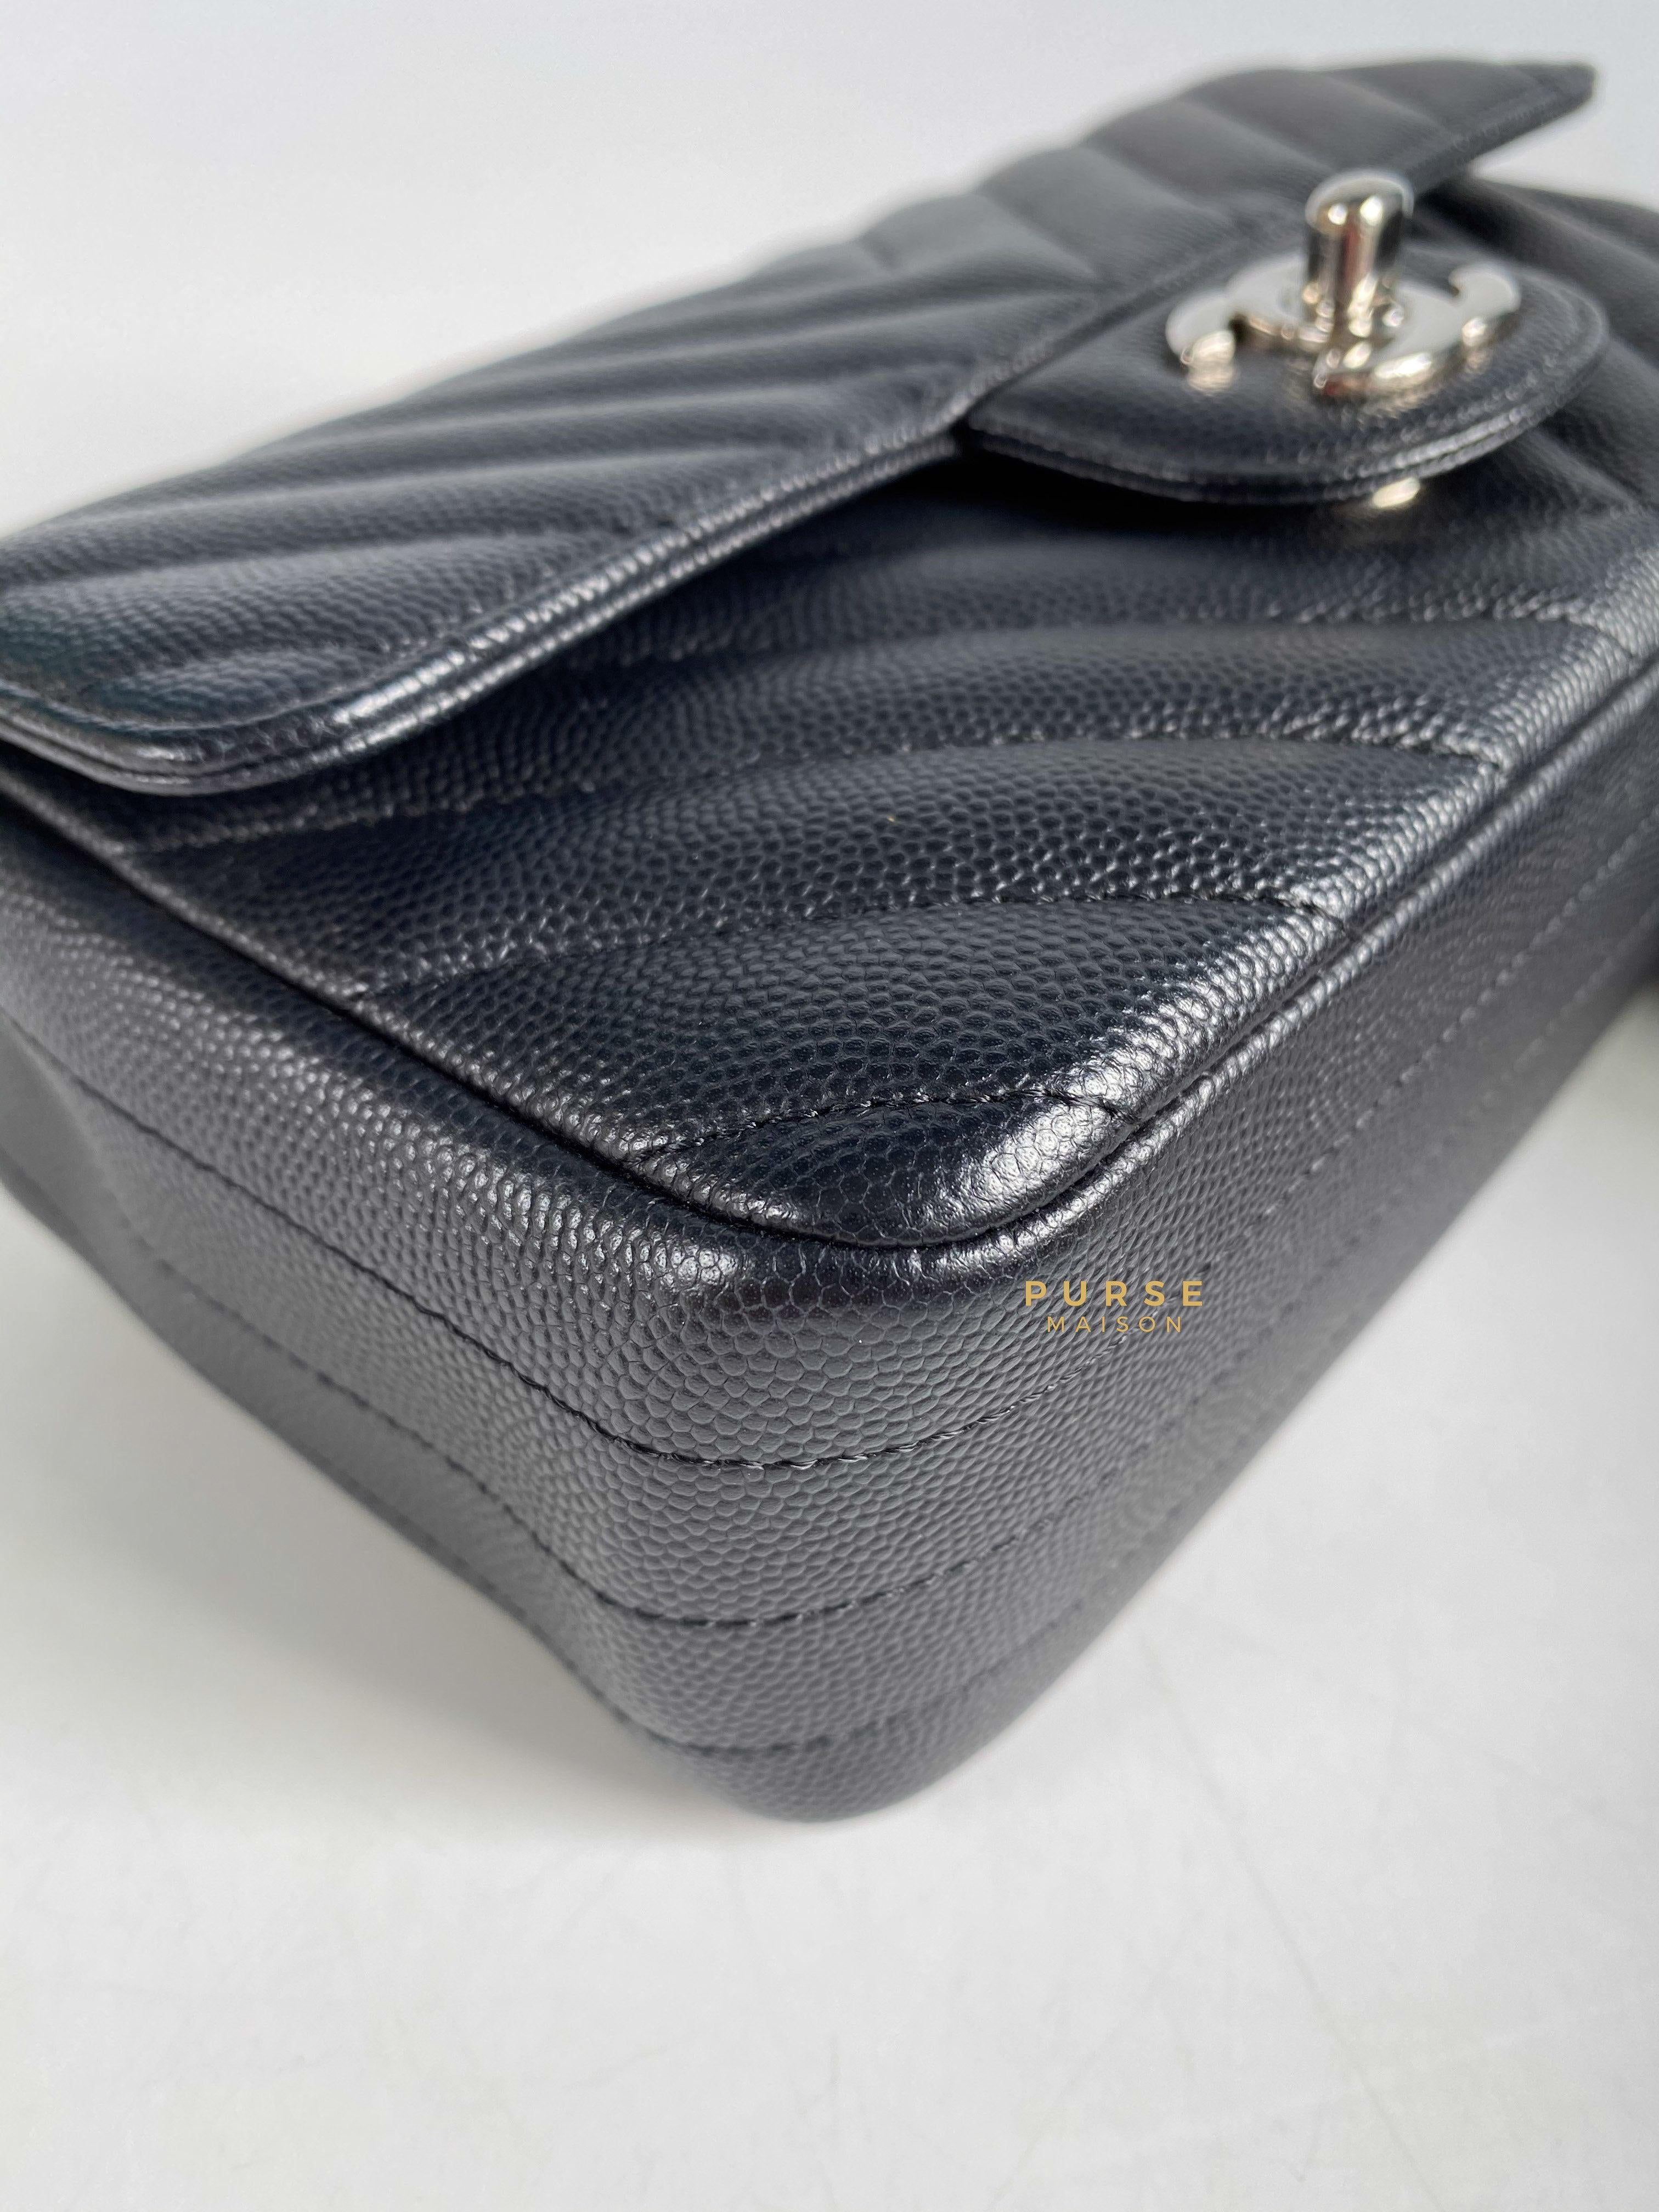 Chanel Mini Rectangle Black Chevron Caviar and Silver Hardware Series 25 | Purse Maison Luxury Bags Shop